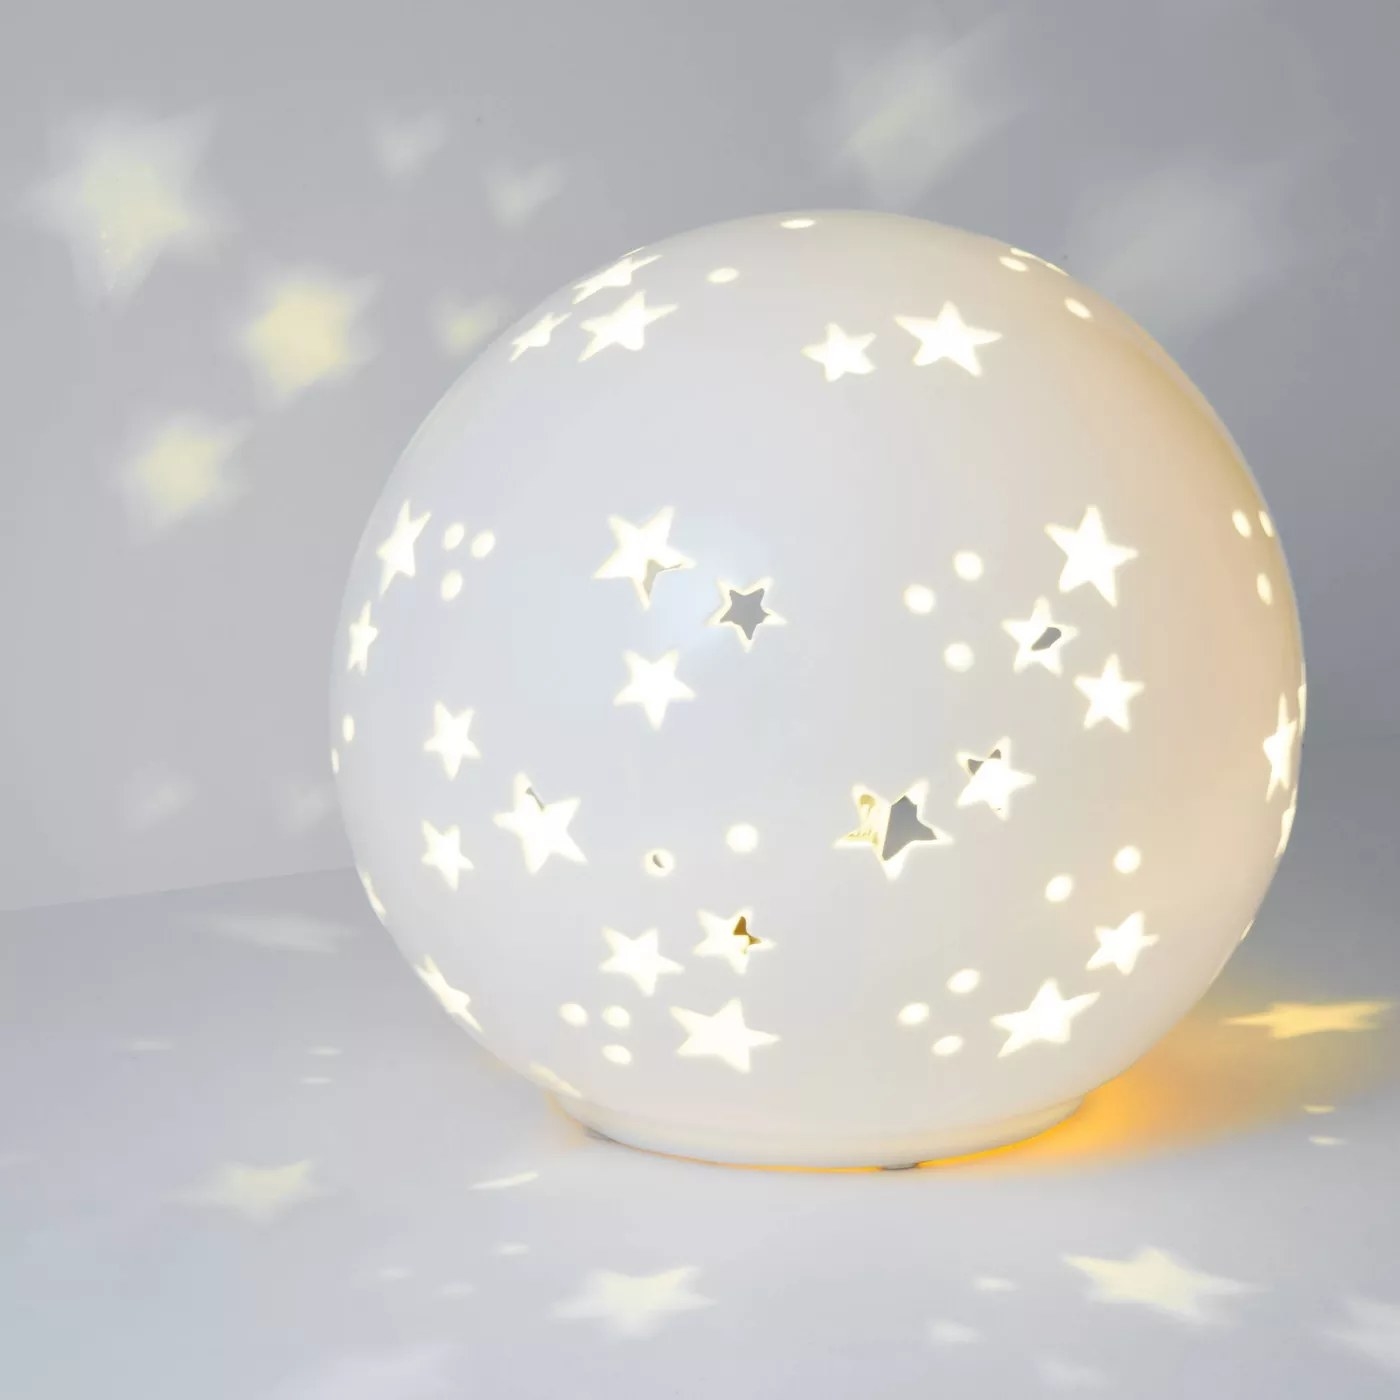 The white nightlight globe with star cutouts